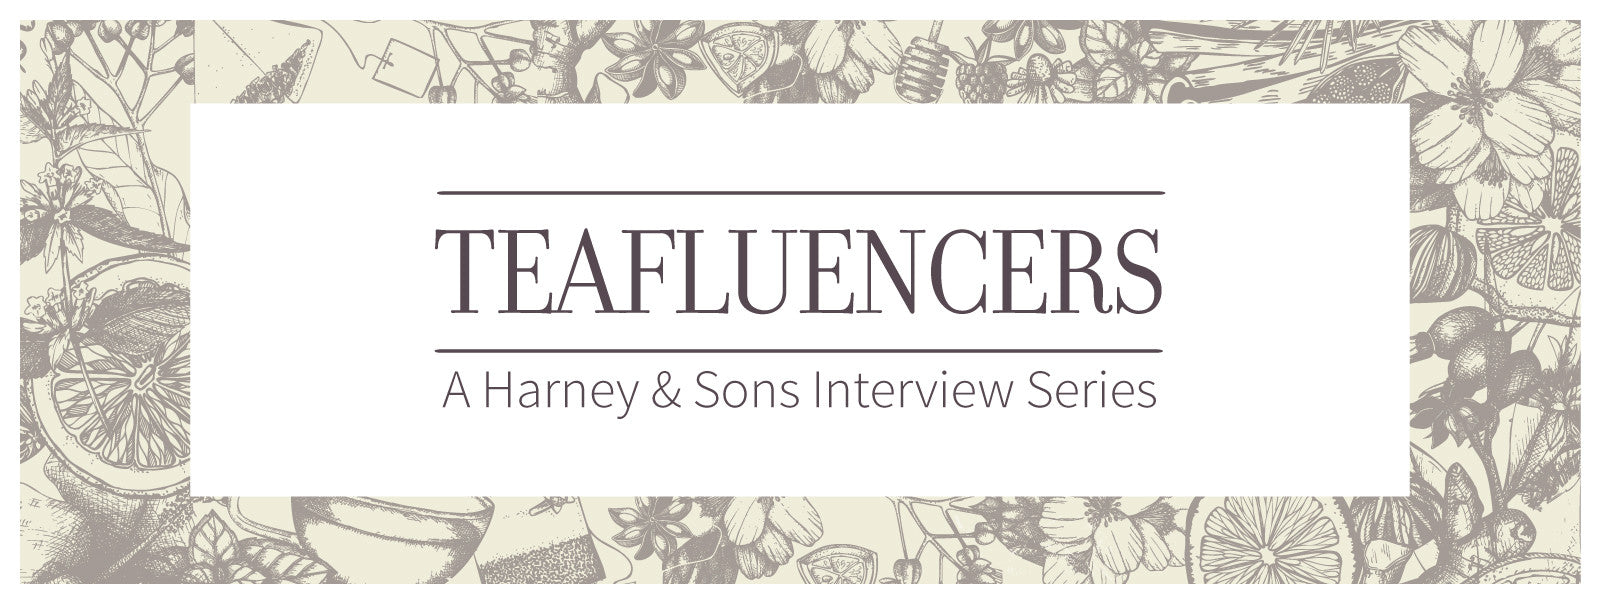 Noah Wilson-Rich | Harney & Sons Teafluencer